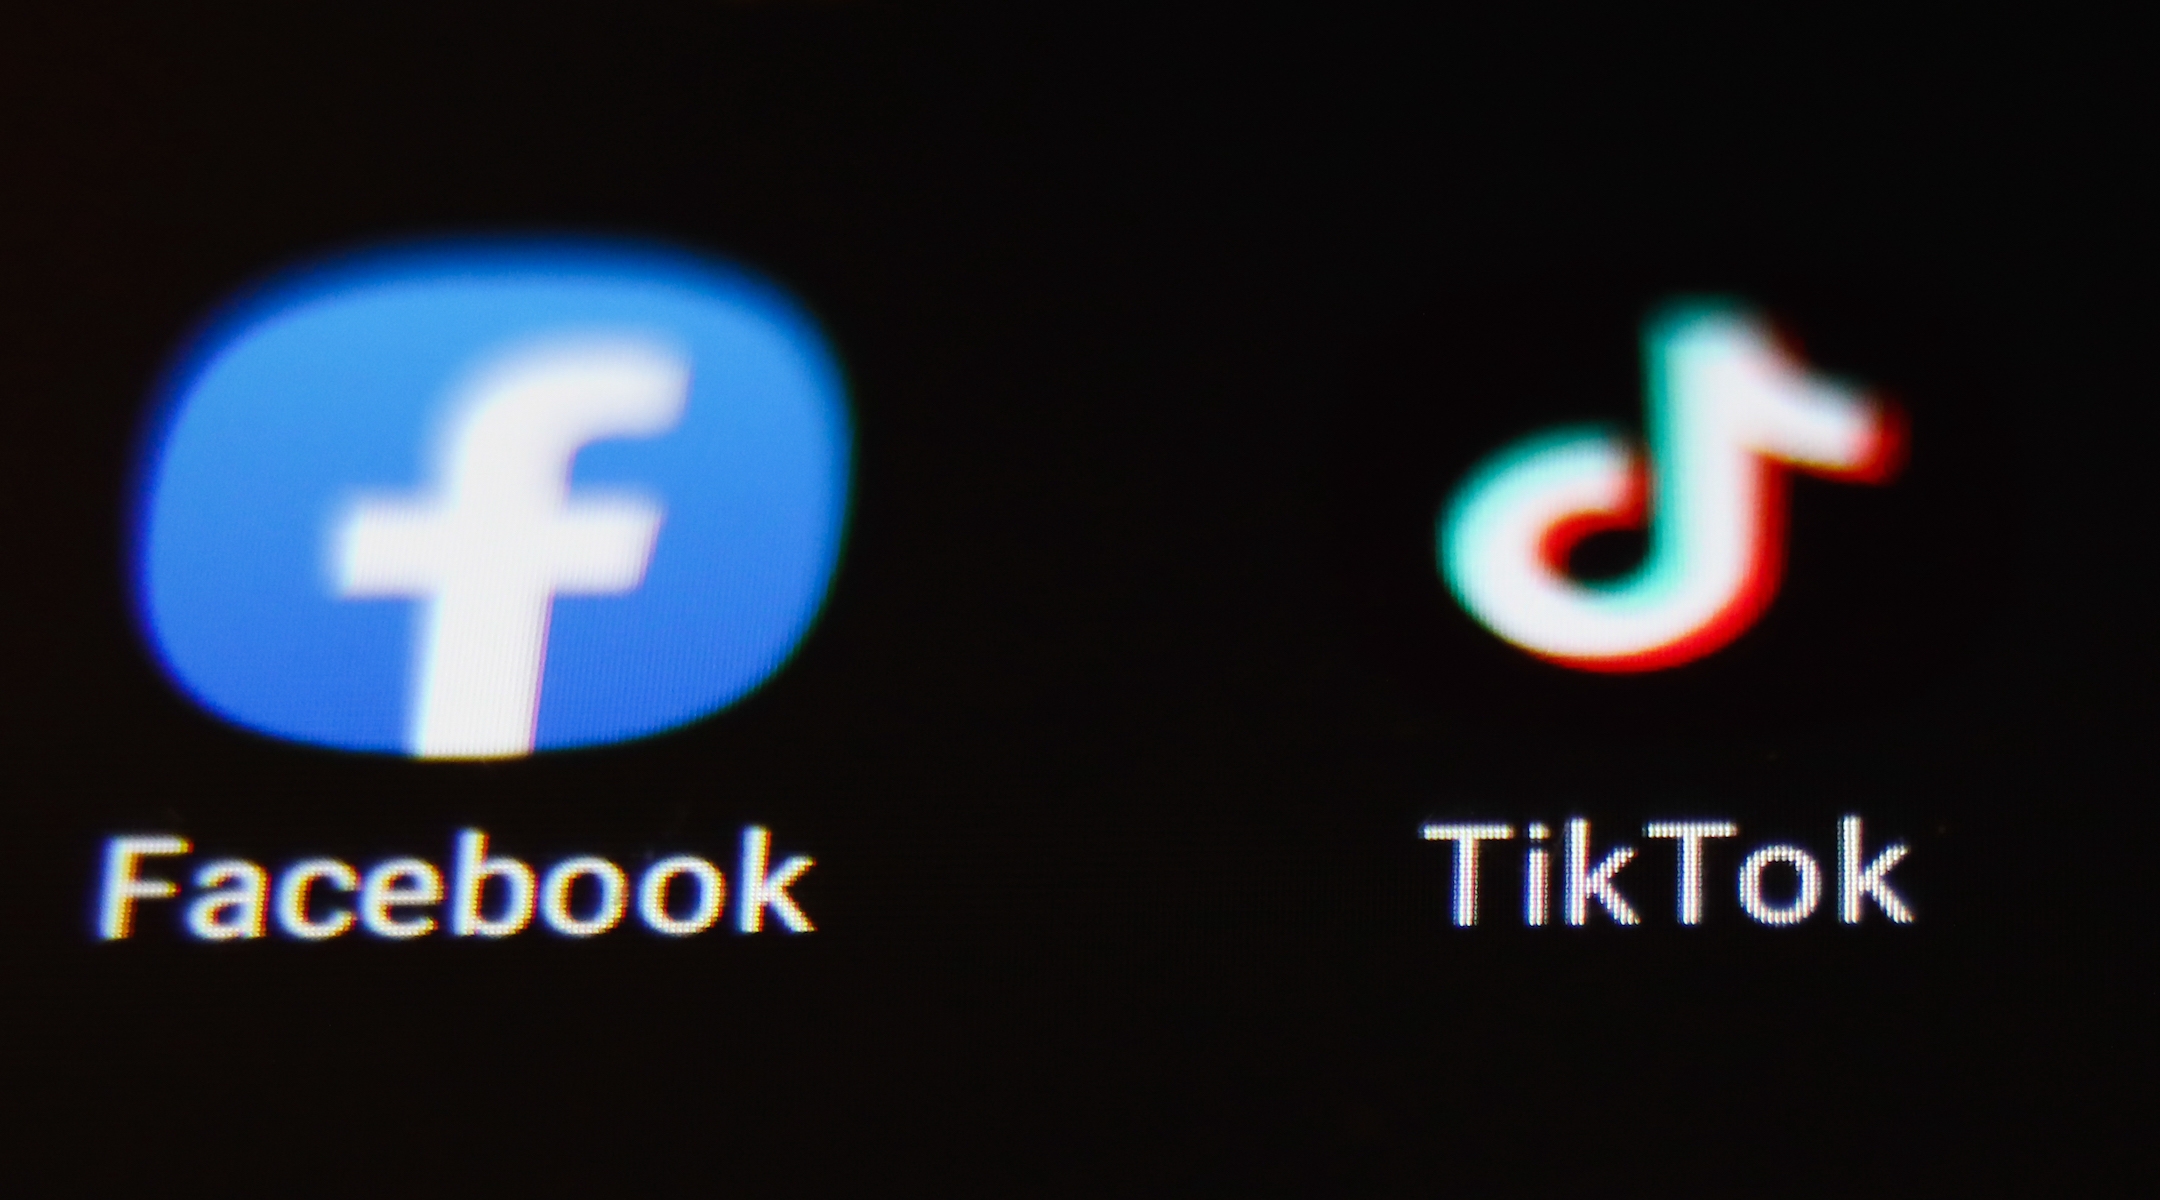 Facebook and TikTok logos